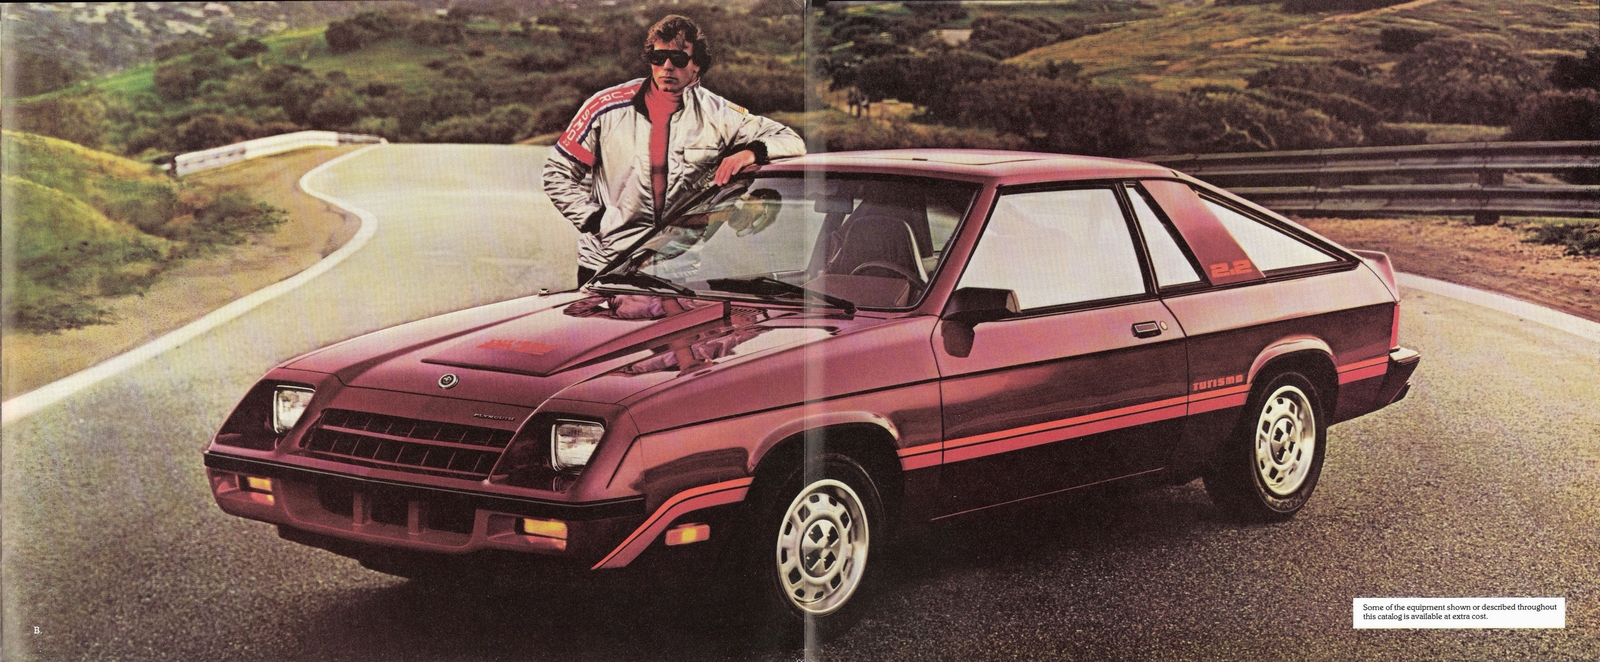 n_1982 Plymouth Turismo Foldout-03-04.jpg